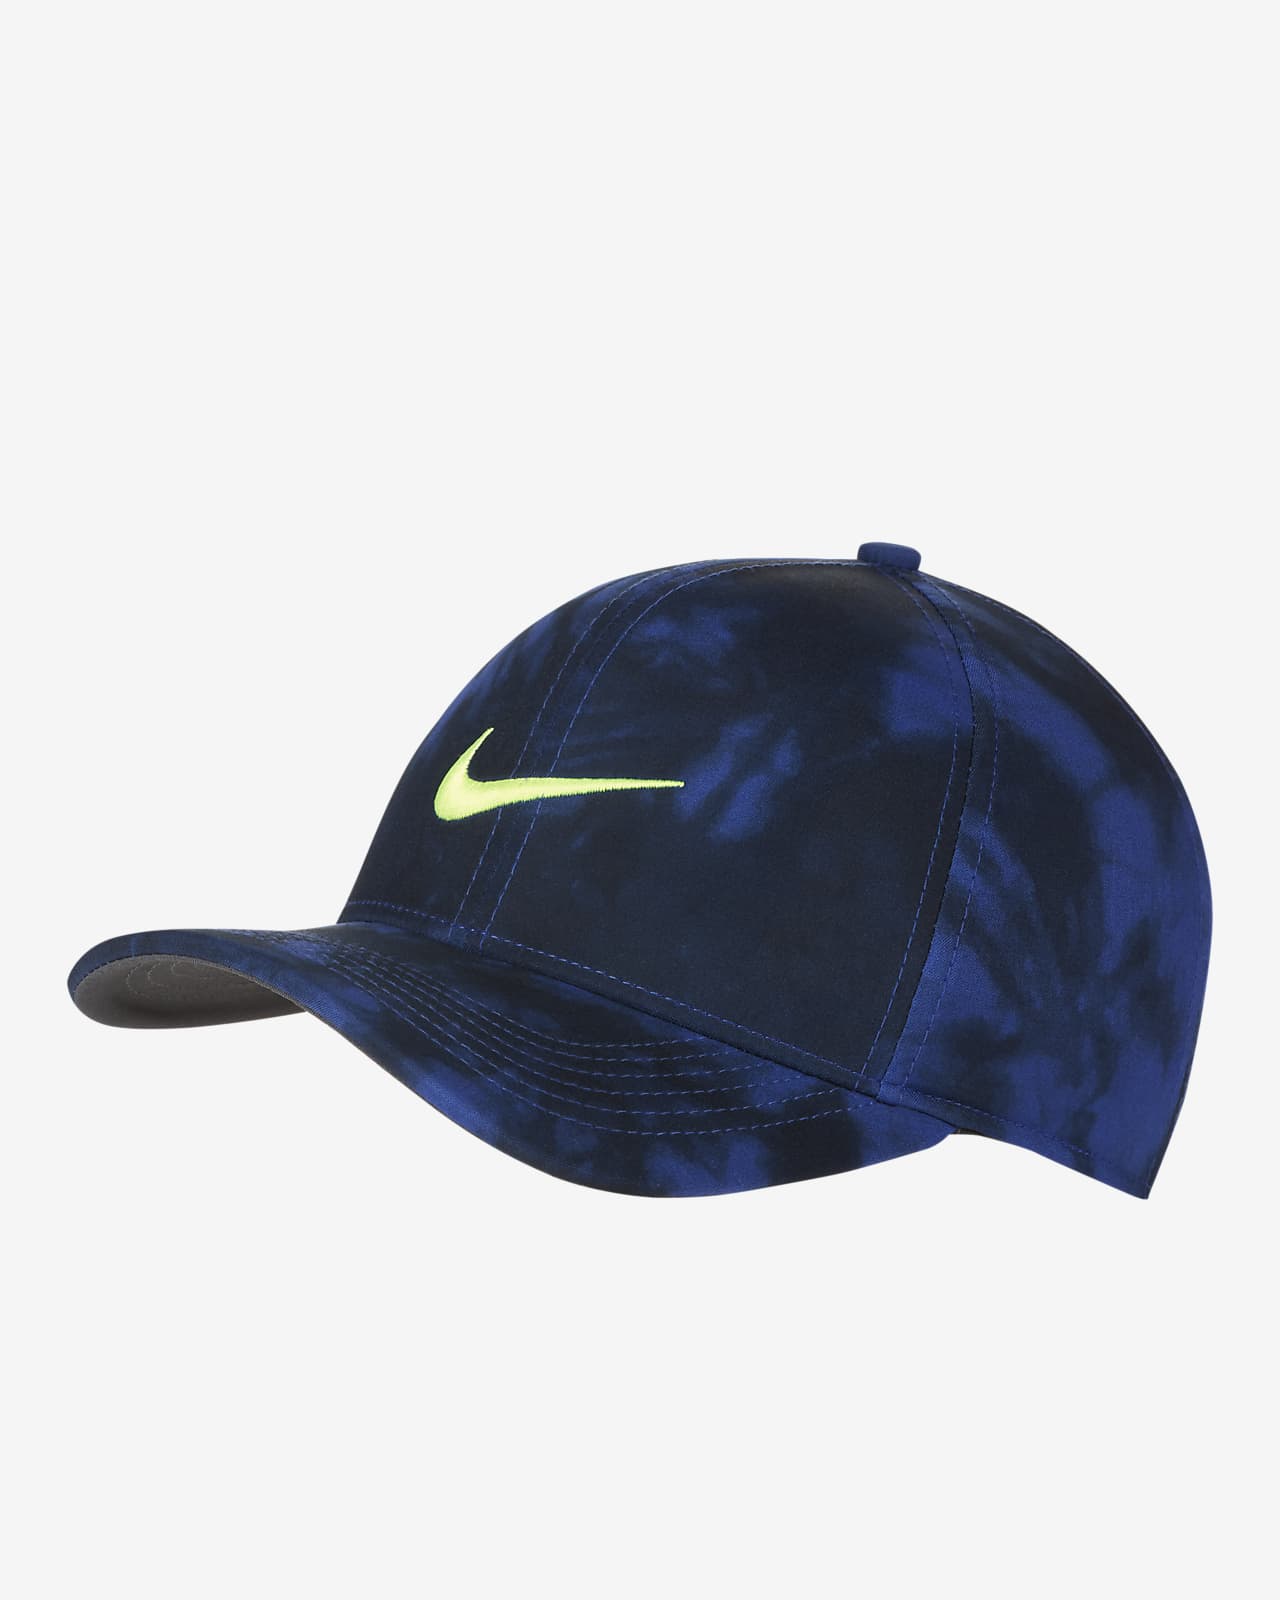 blue nike cap